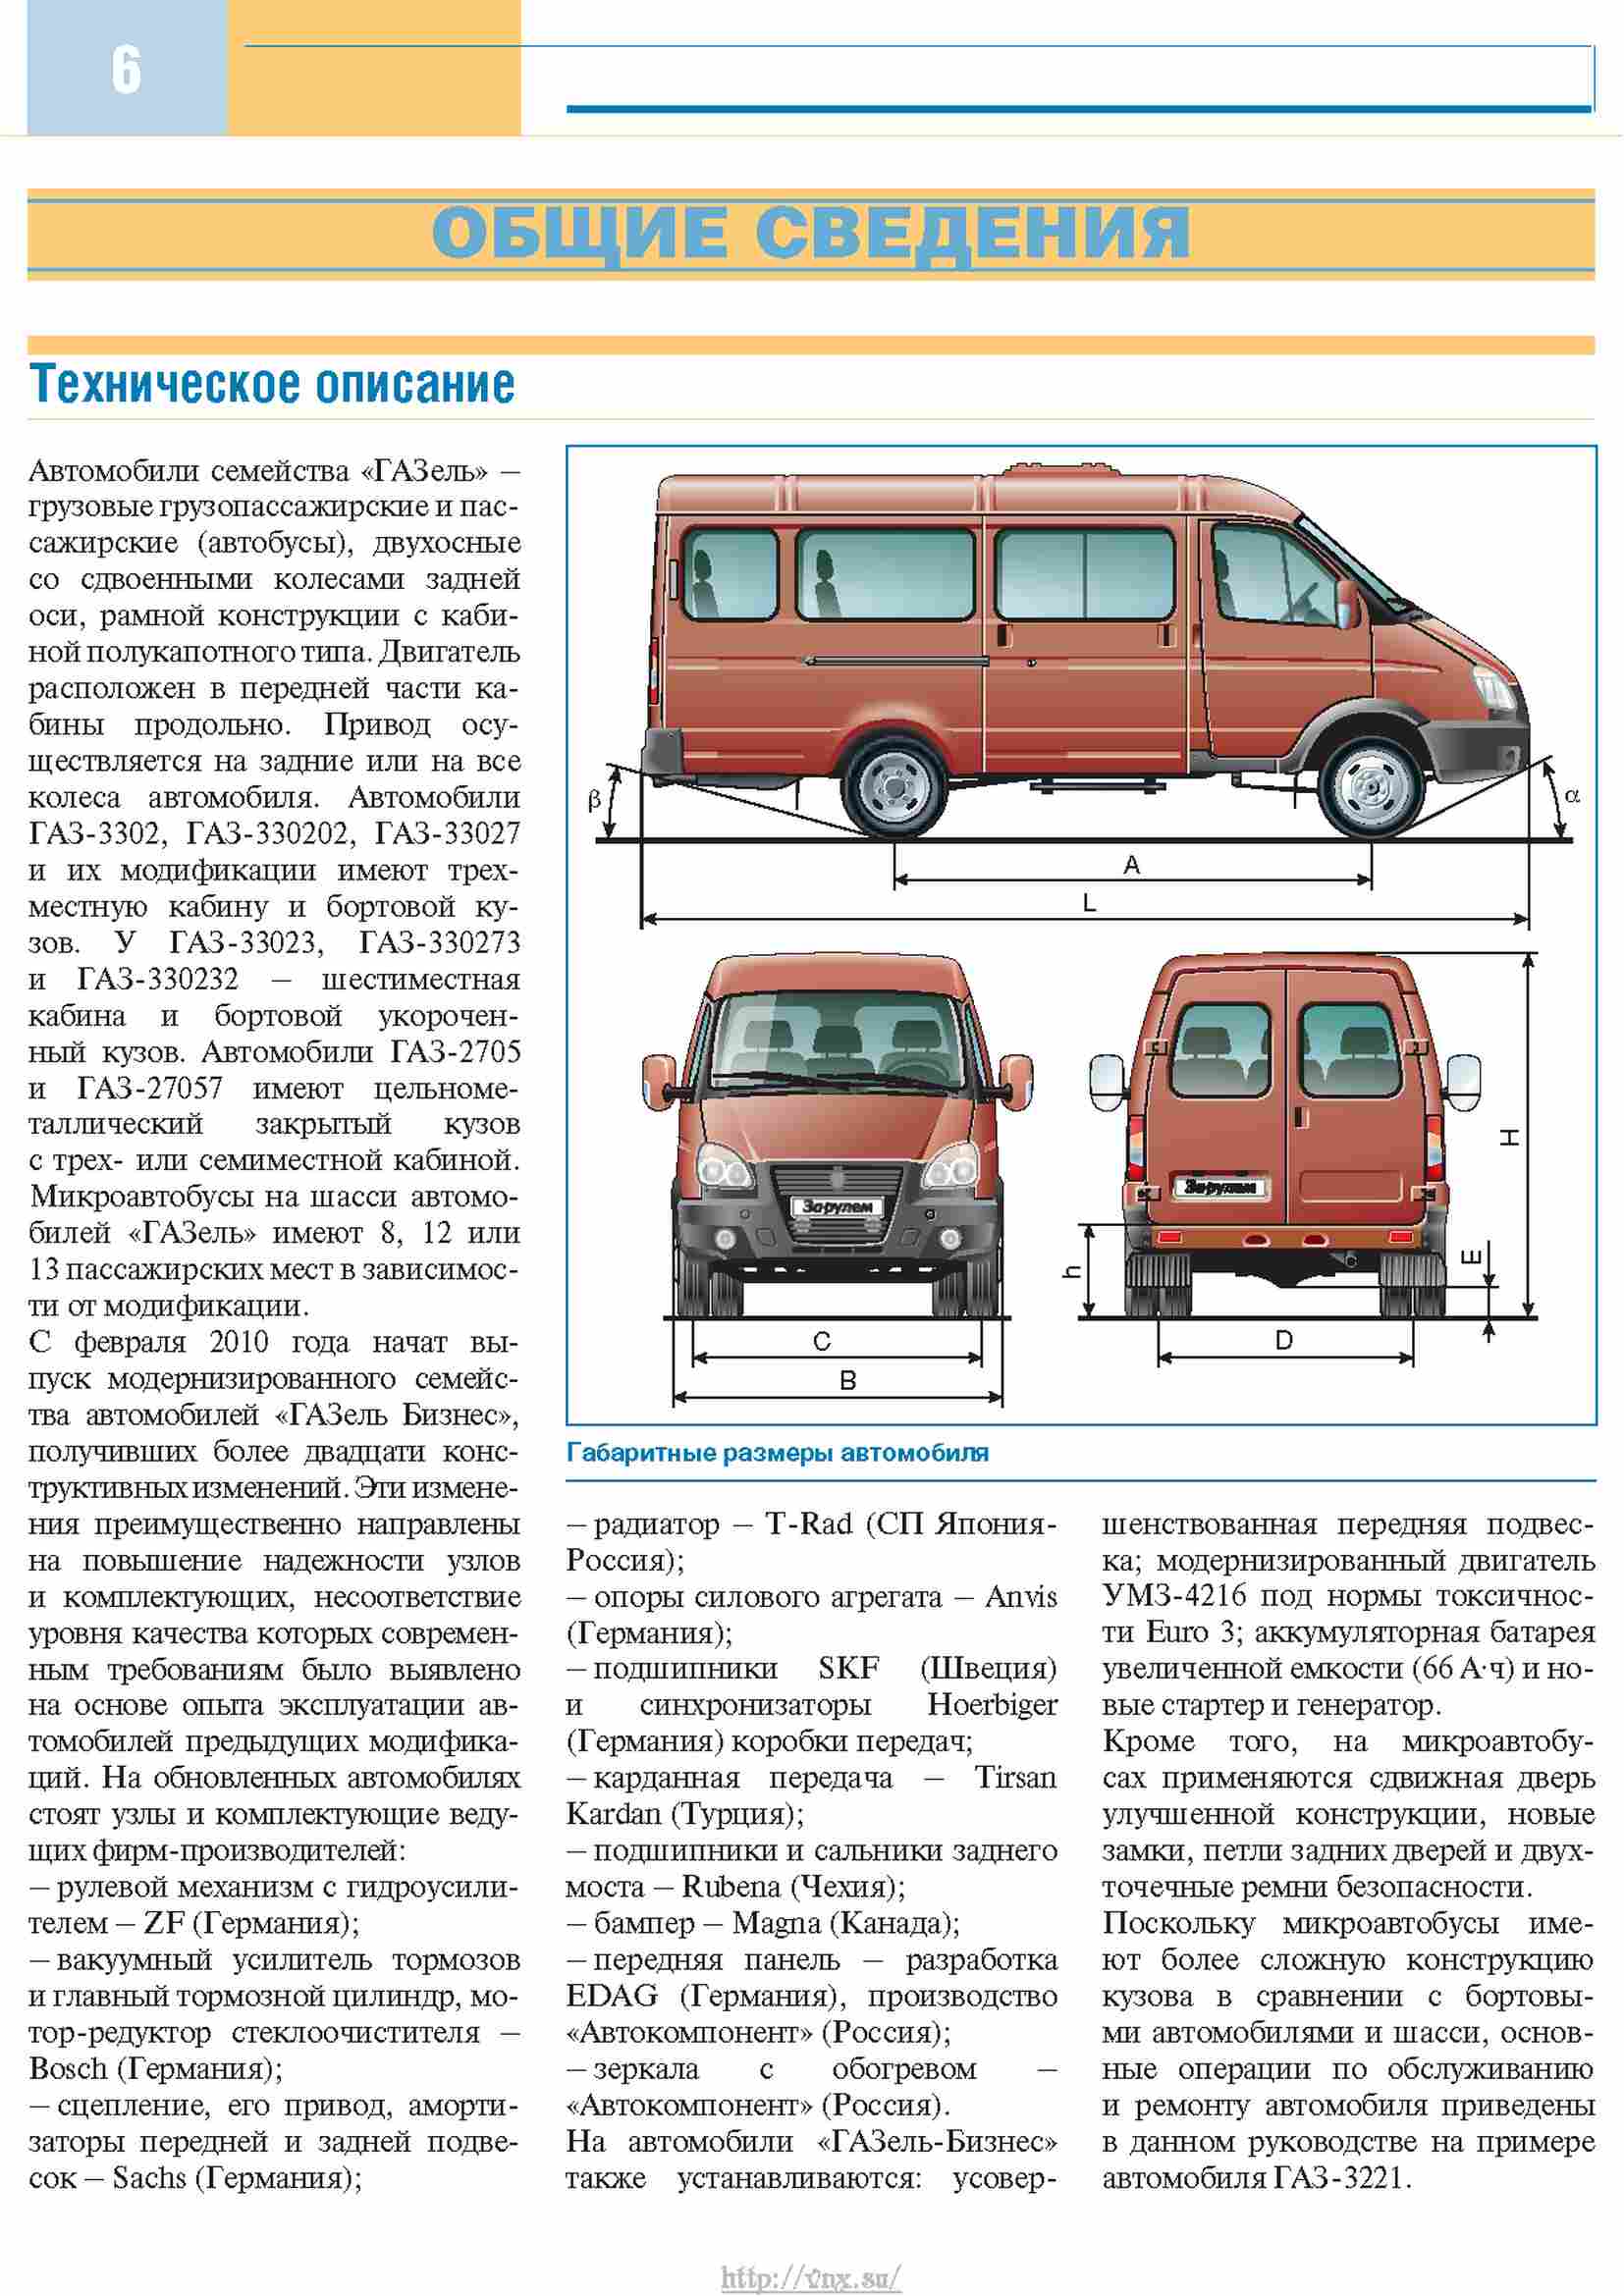 Газ-2217: описание модели и технические характеристики :: syl.ru